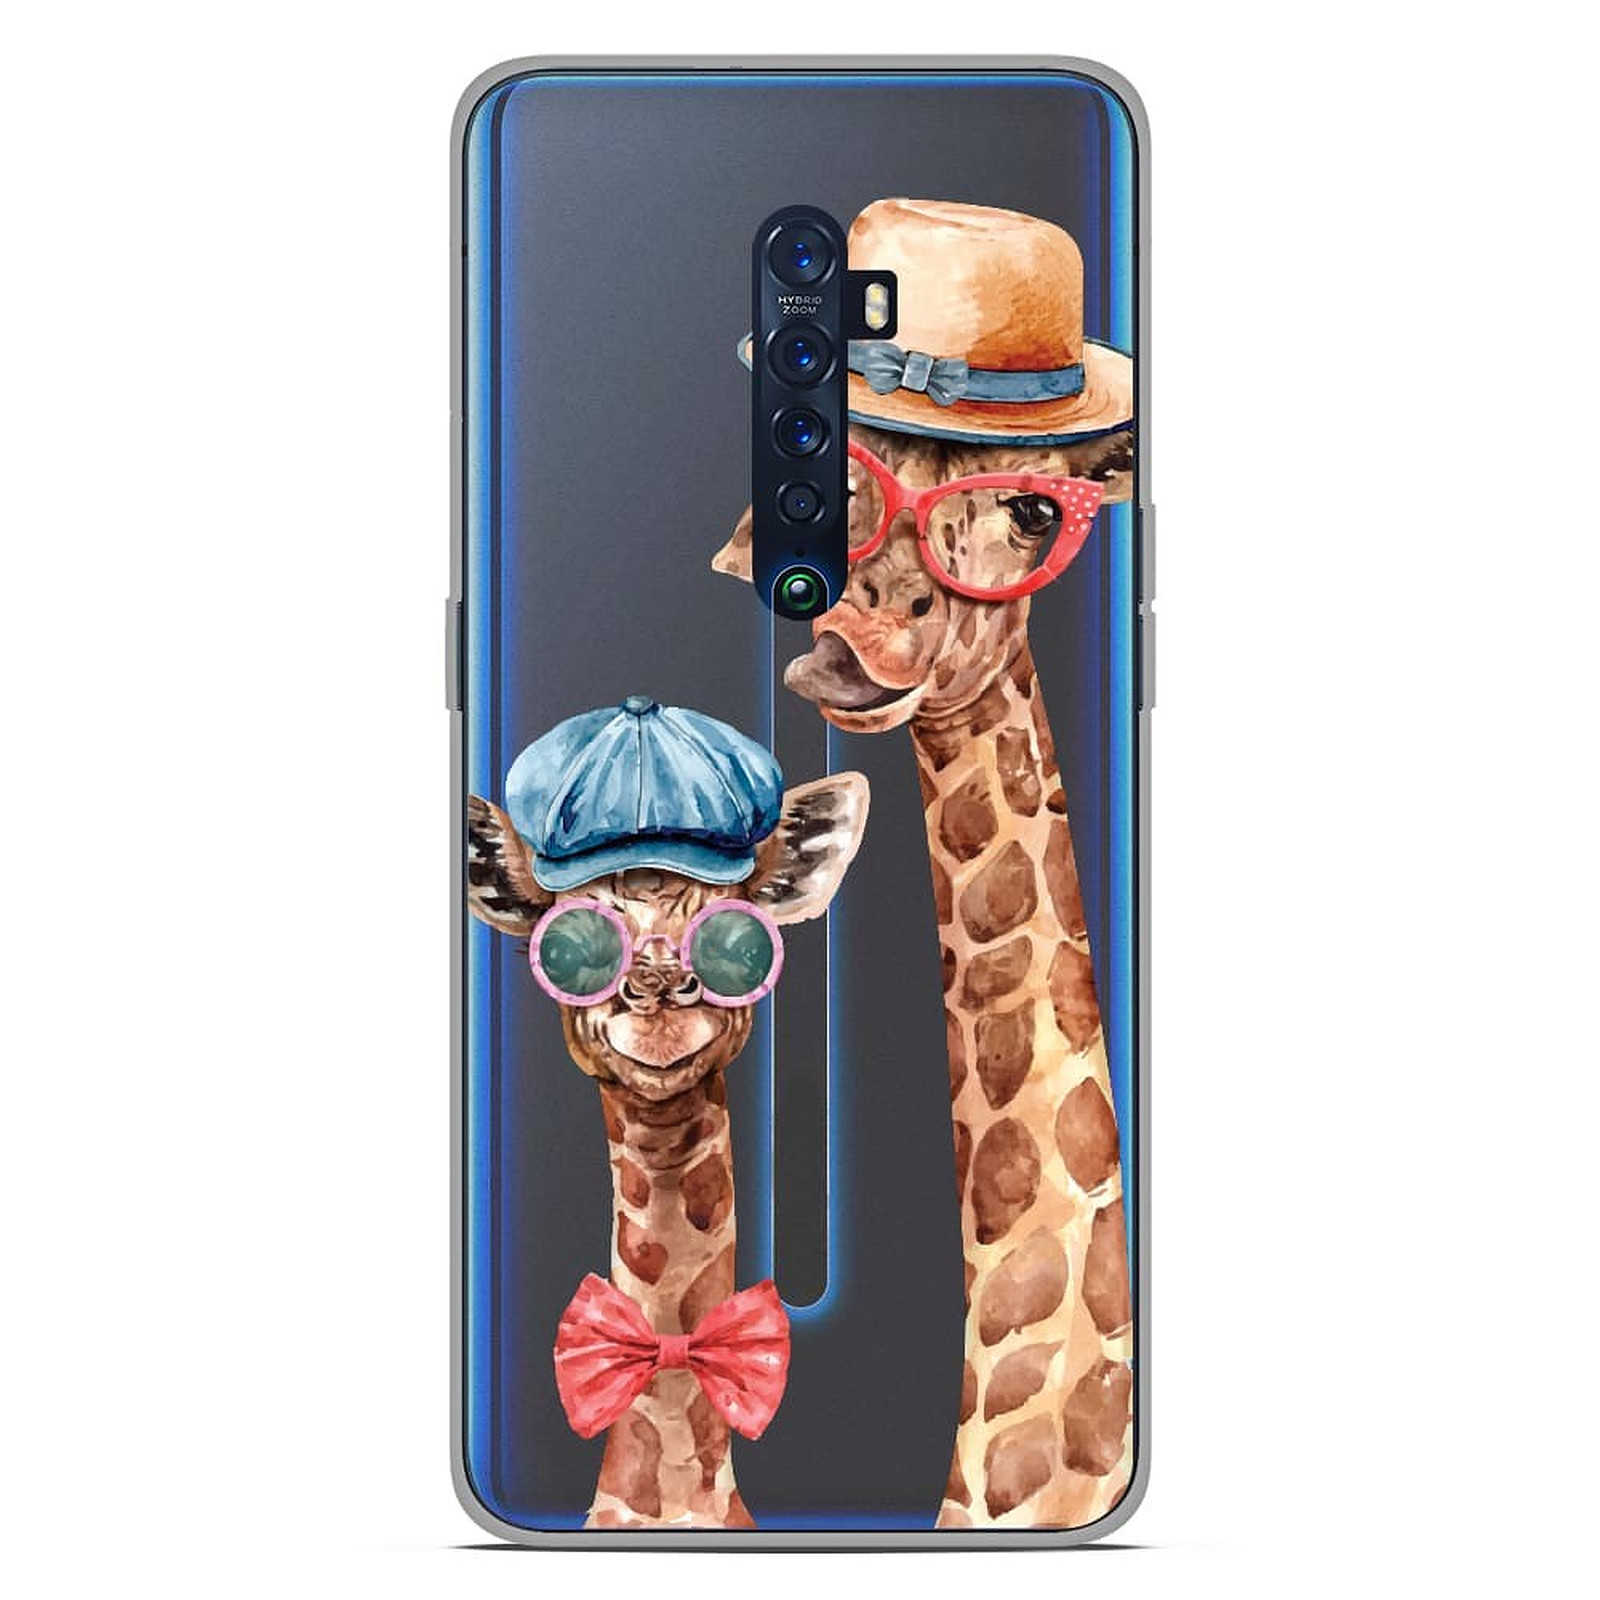 1001 Coques Coque silicone gel Oppo Reno 2 motif Funny Girafe - Coque telephone 1001Coques